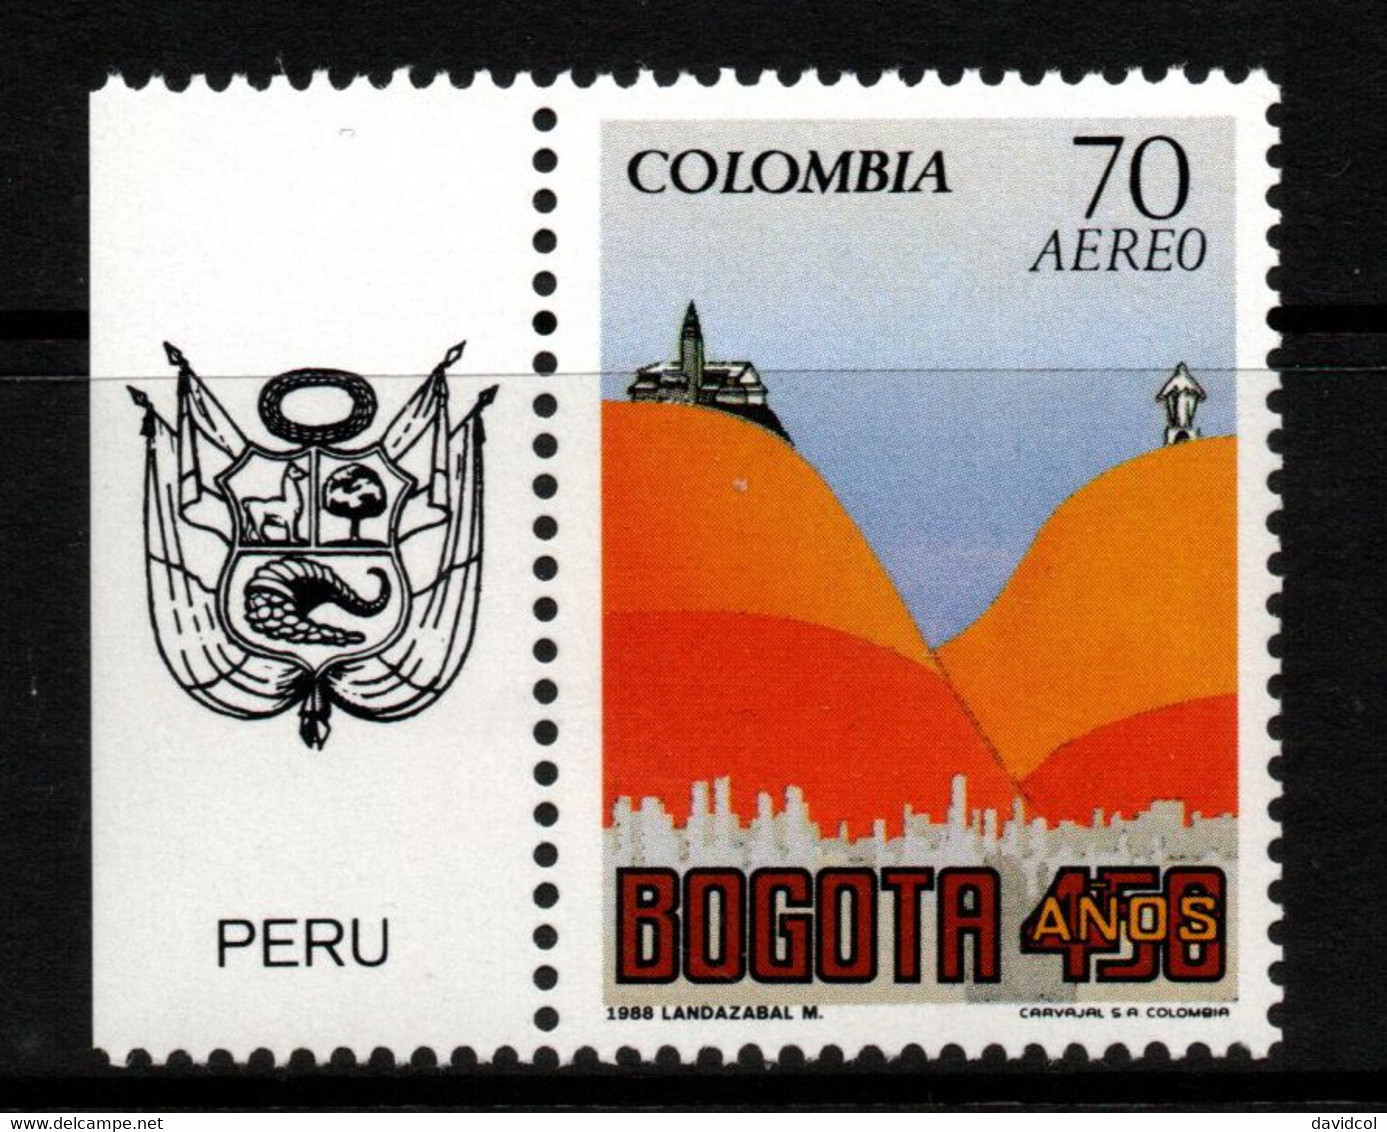 02G- KOLUMBIEN - 1988 - MI#:1717 - MNH- BOGOTA 450 YEARS – PERU COAT OF ARMS LABEL - Colombie